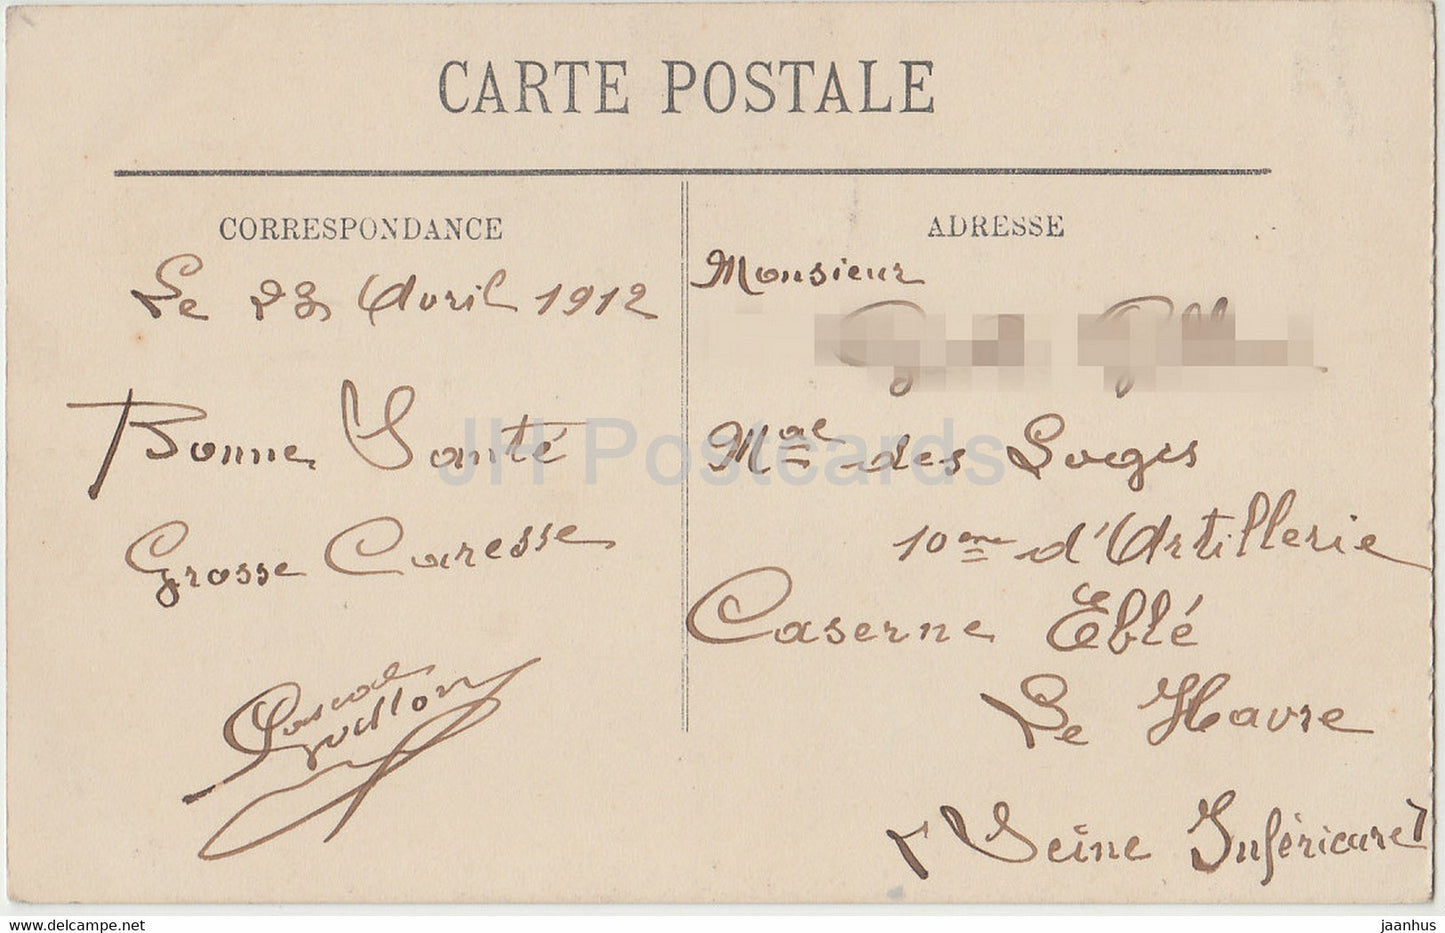 Arles - Le Musee - museum - 38 - old postcard - 1912 - France - used